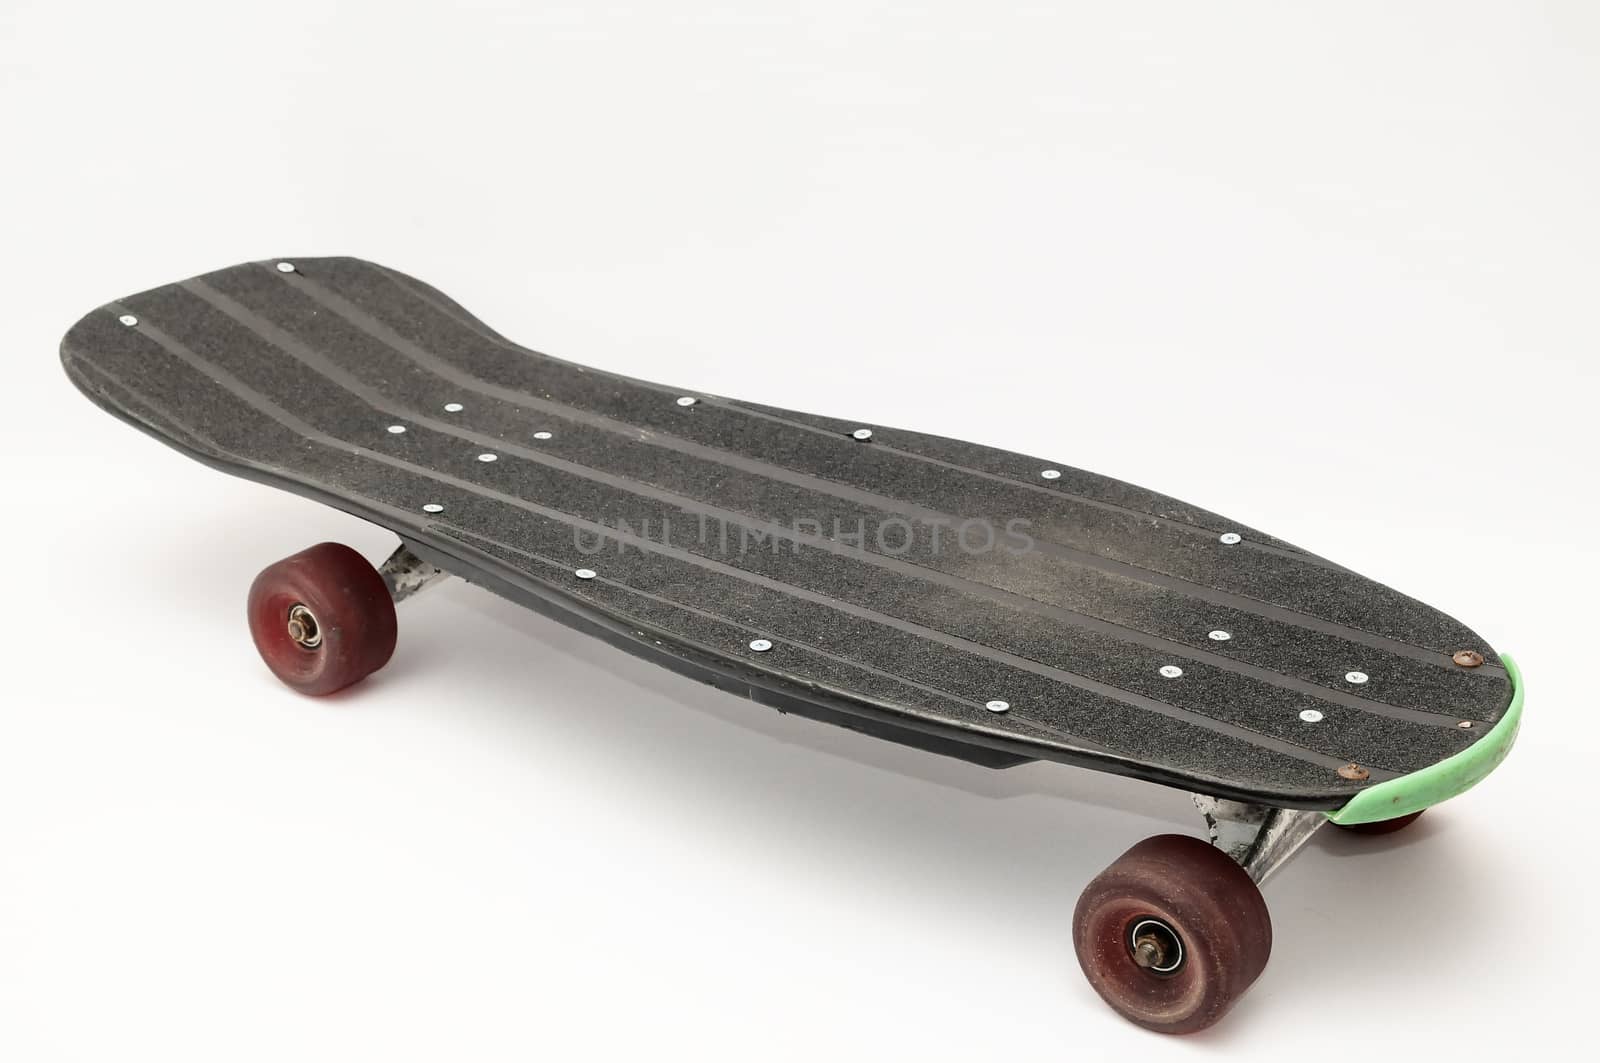 Vintage Style Black Skateboard on a white Background